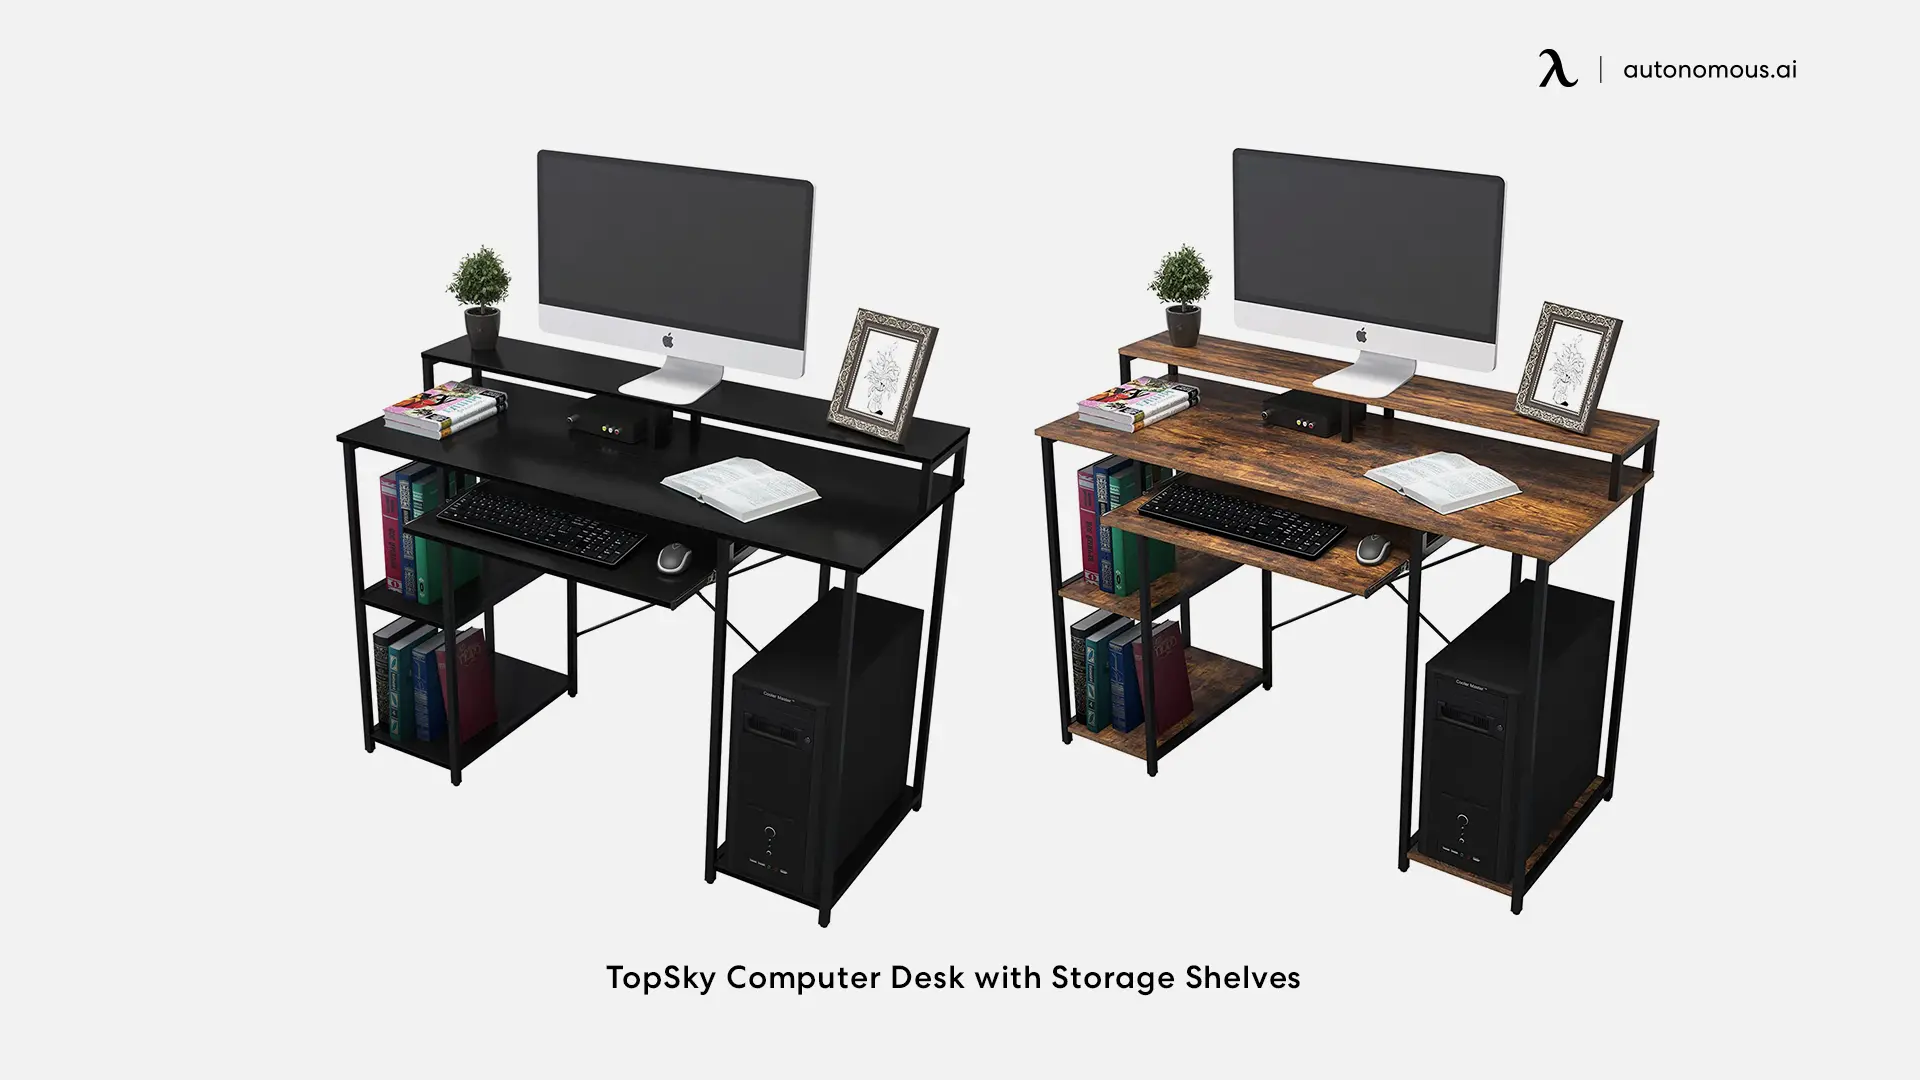 Topsky Computer Desk - compact computer desk